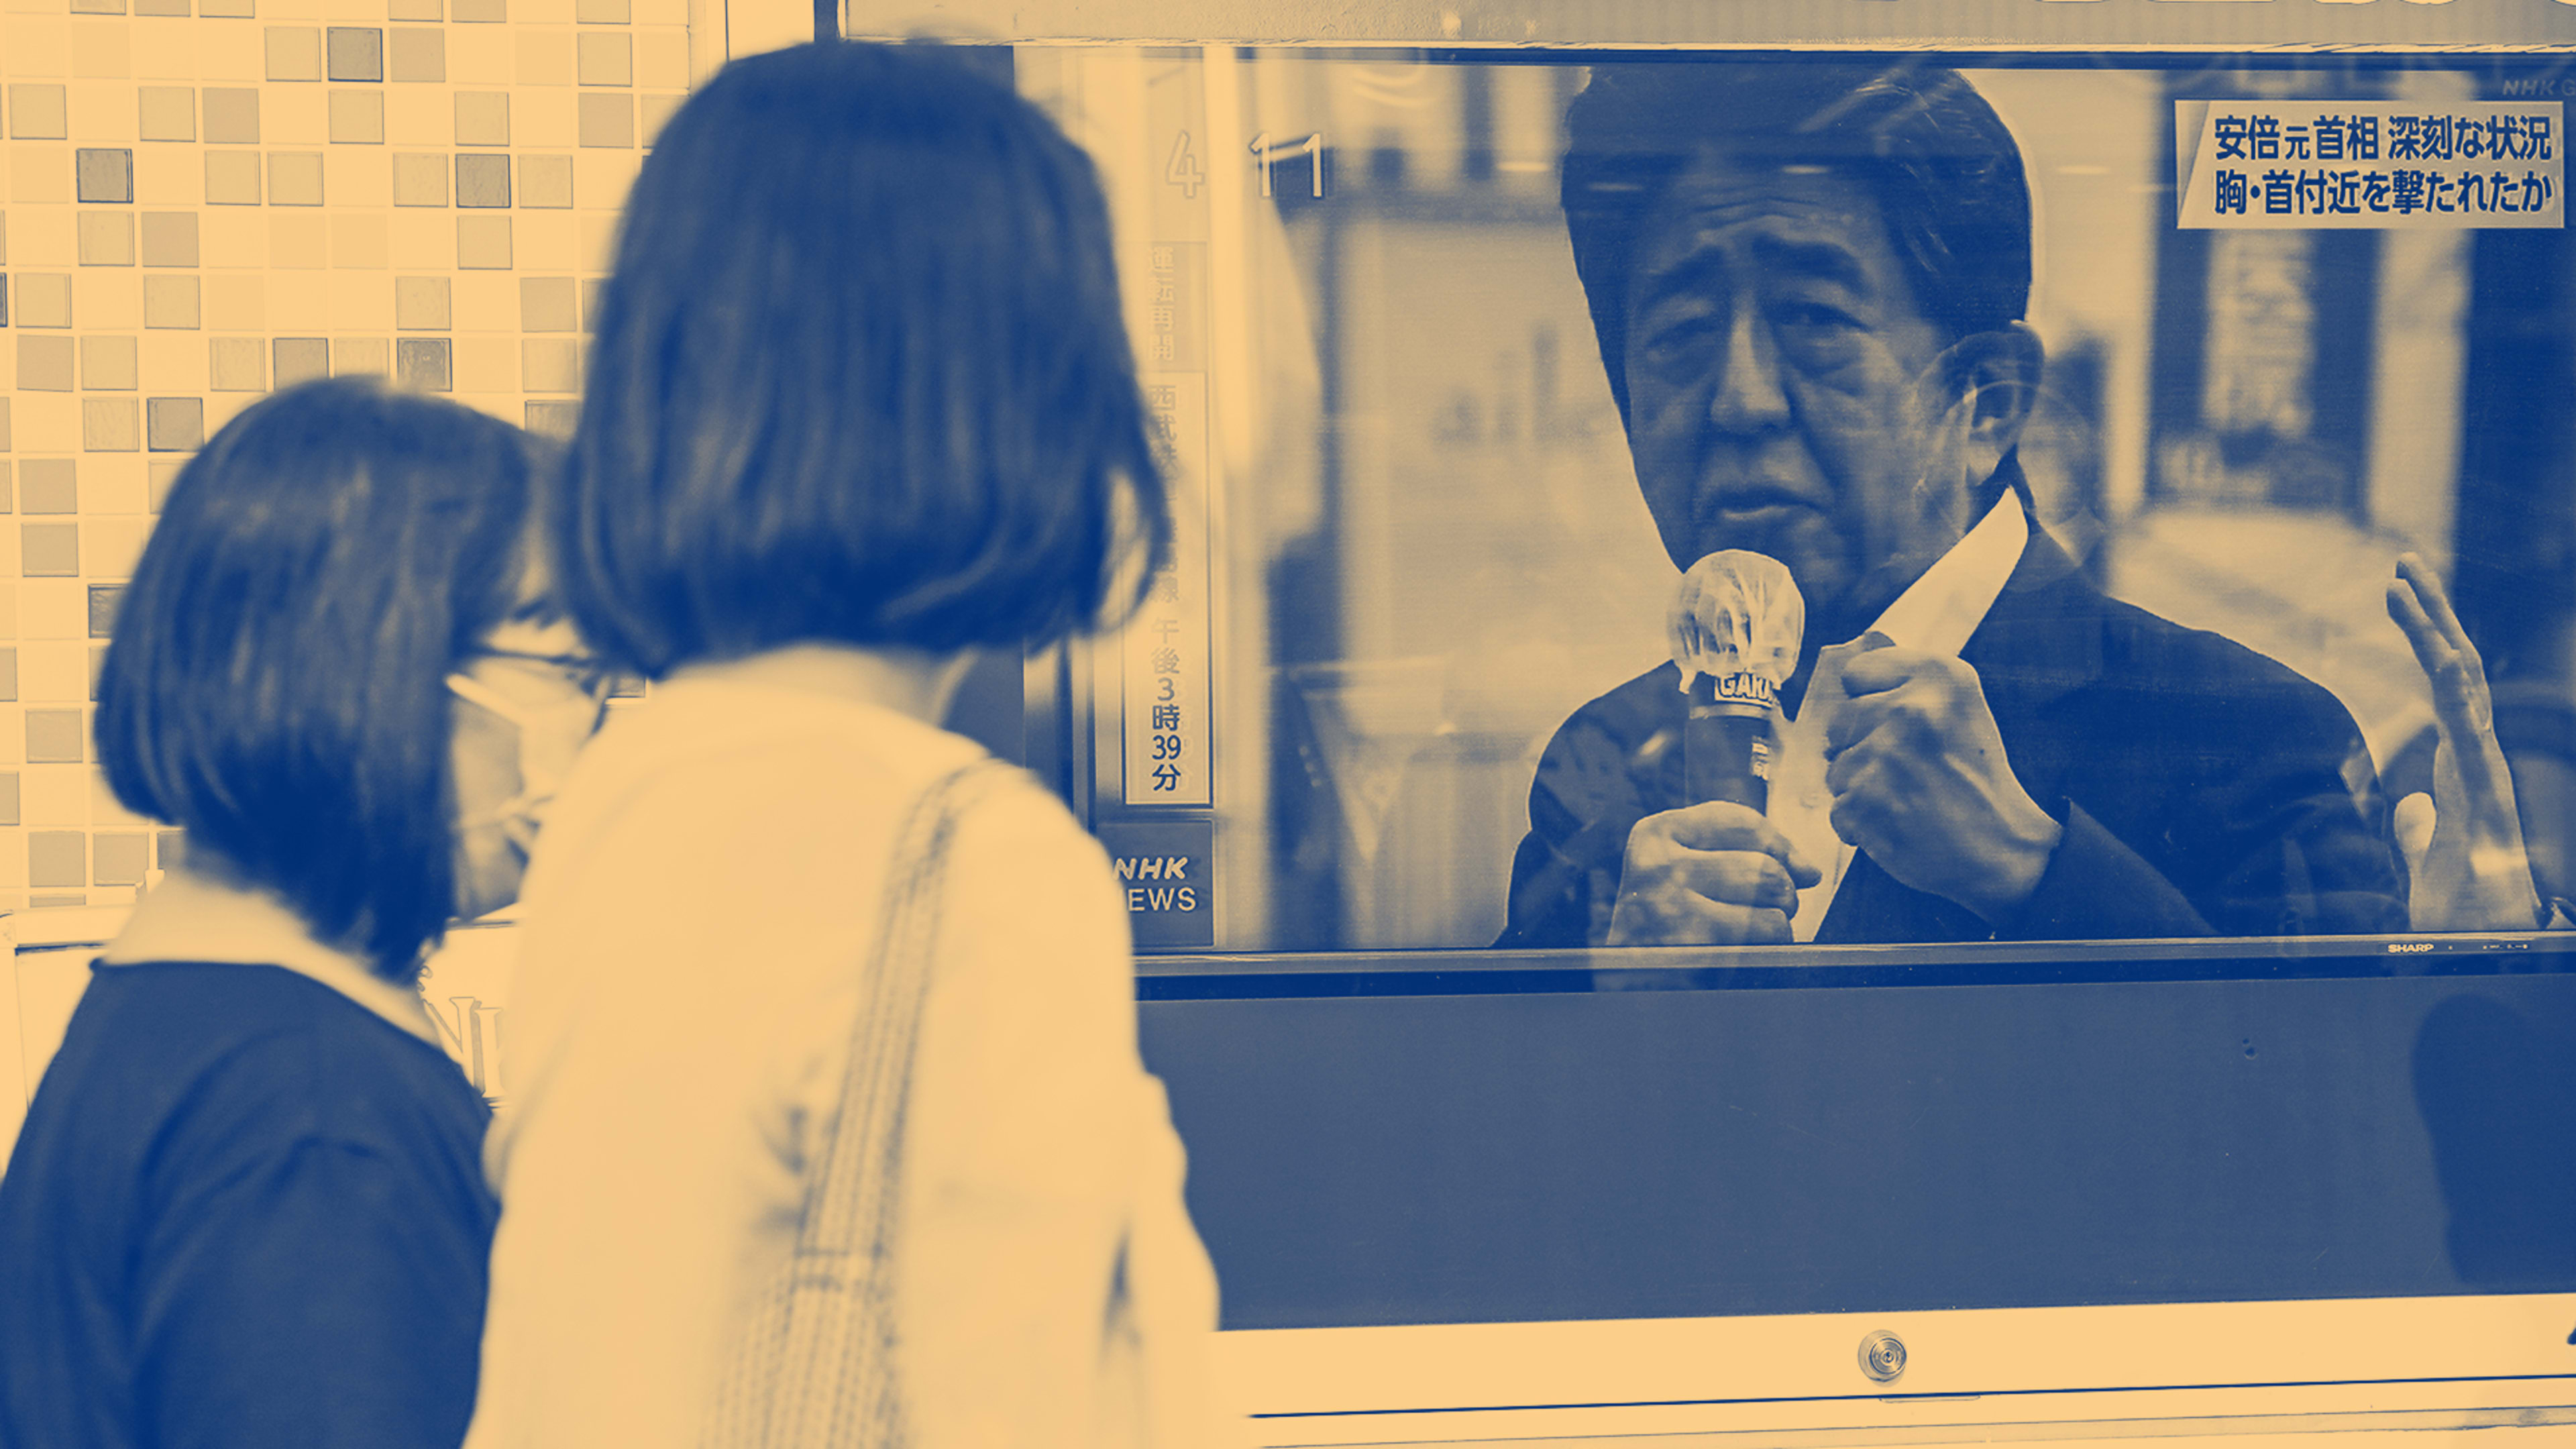 Japan Prime Minister Shinzo Abe’s legacy of ‘Womenomics’